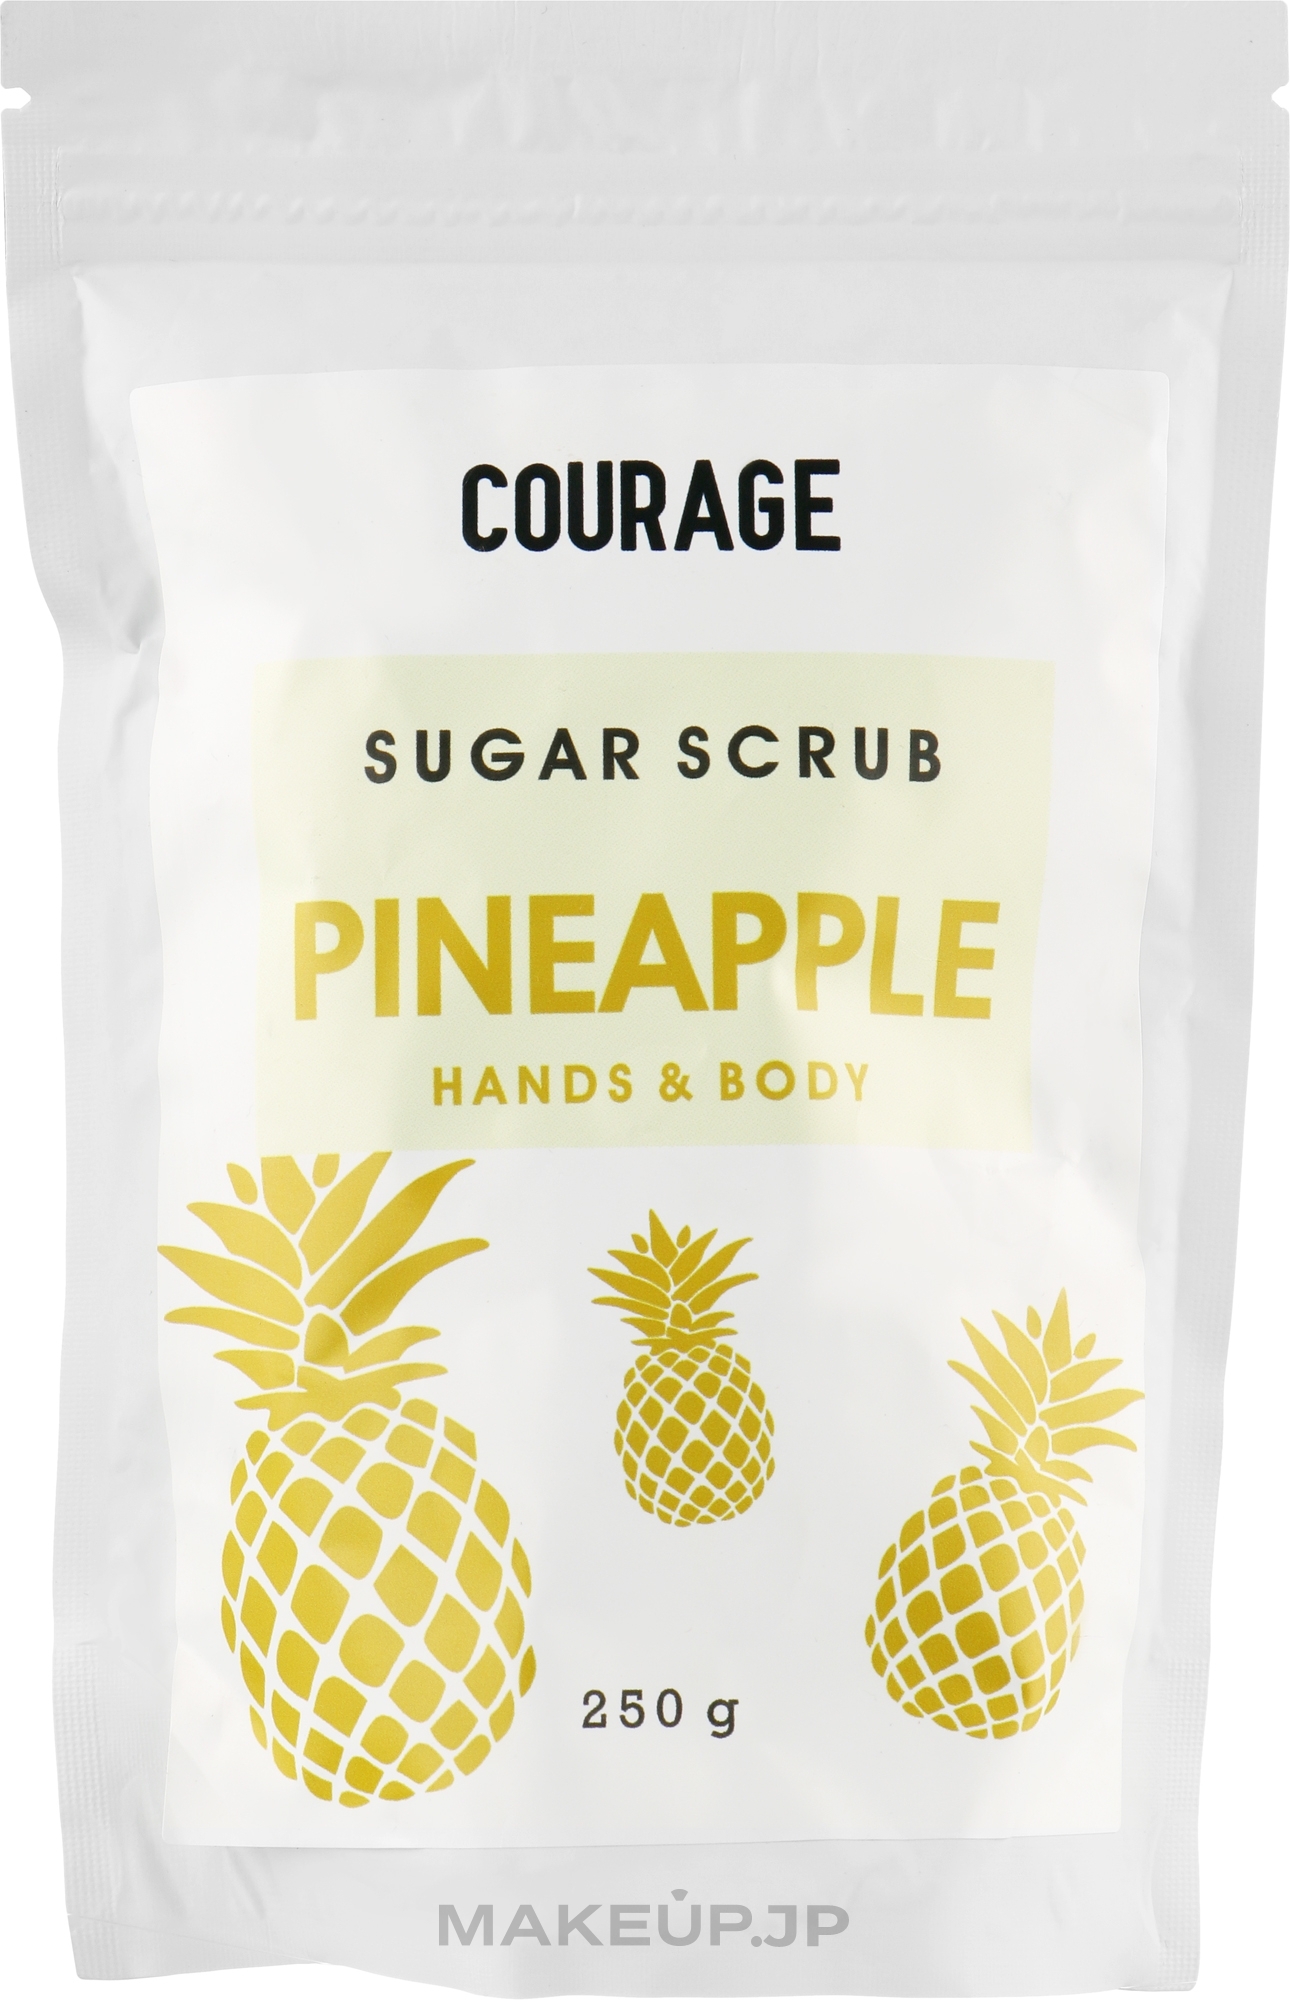 Pineapple Hand & Body Sugar Scrub - Courage Pineapple Hands & Body Sugar Scrub (doypack) — photo 250 g